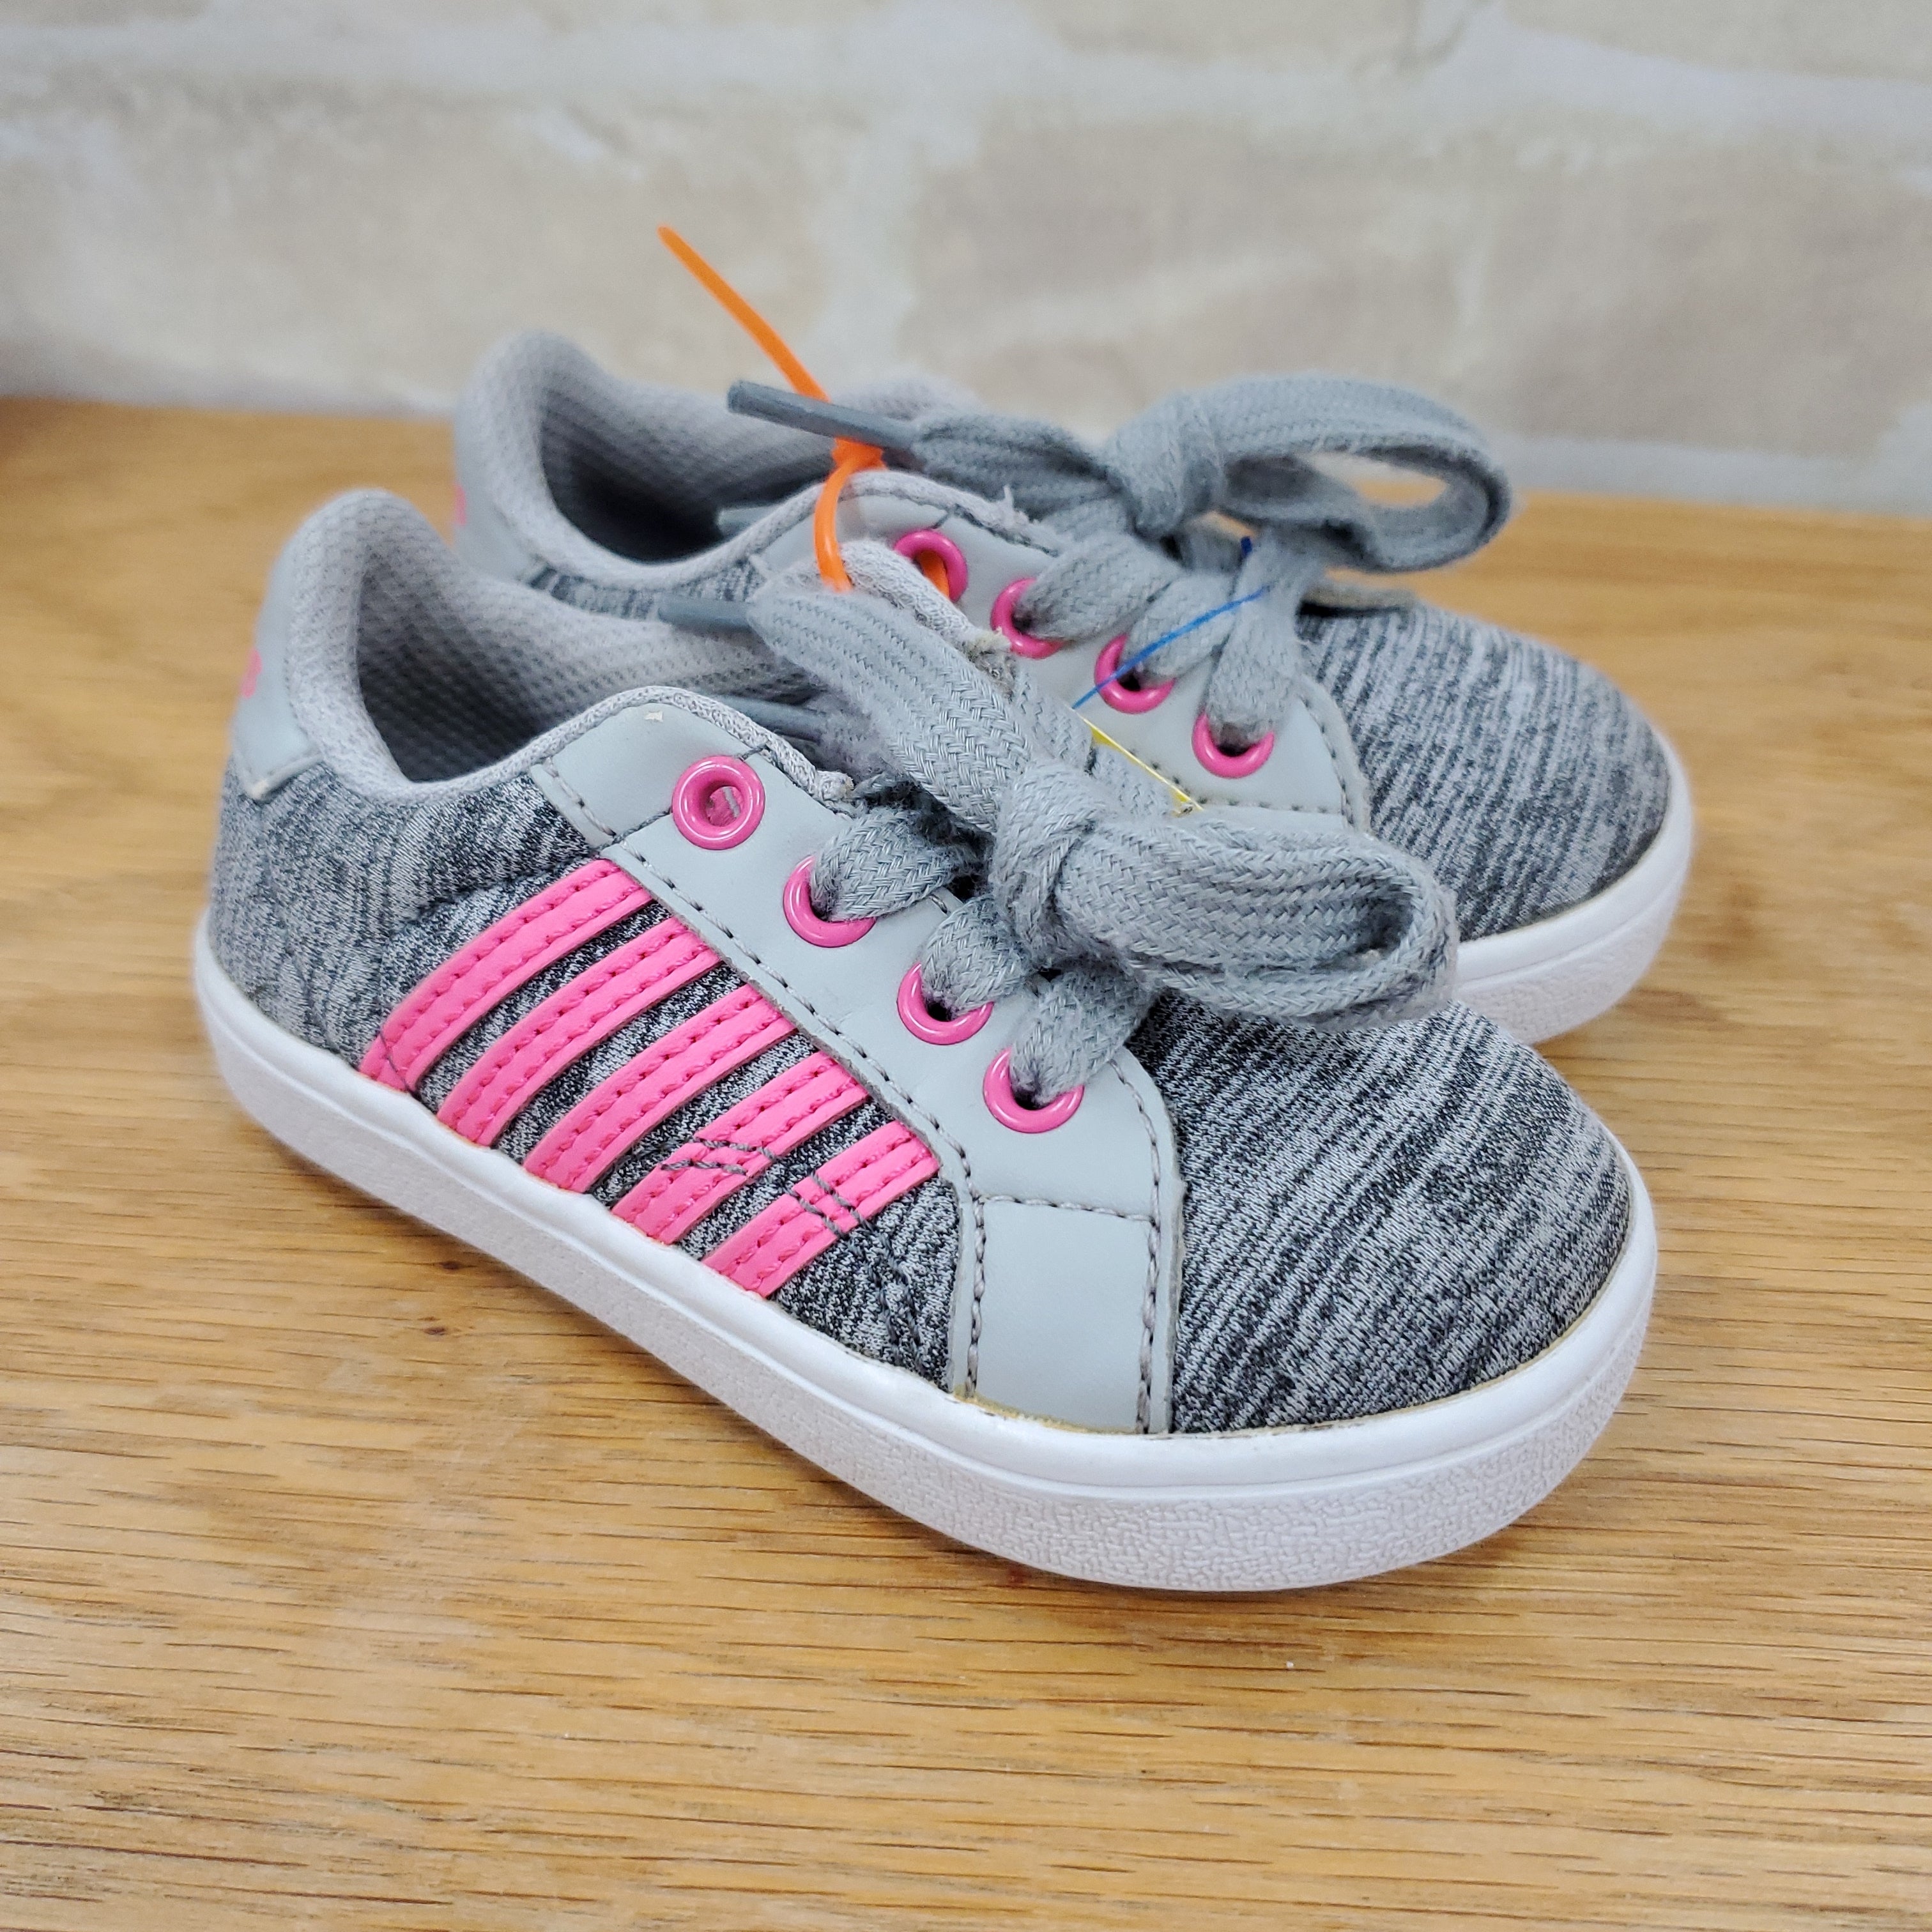 Swiss girl tennis shoes gray/pink tie 4.5